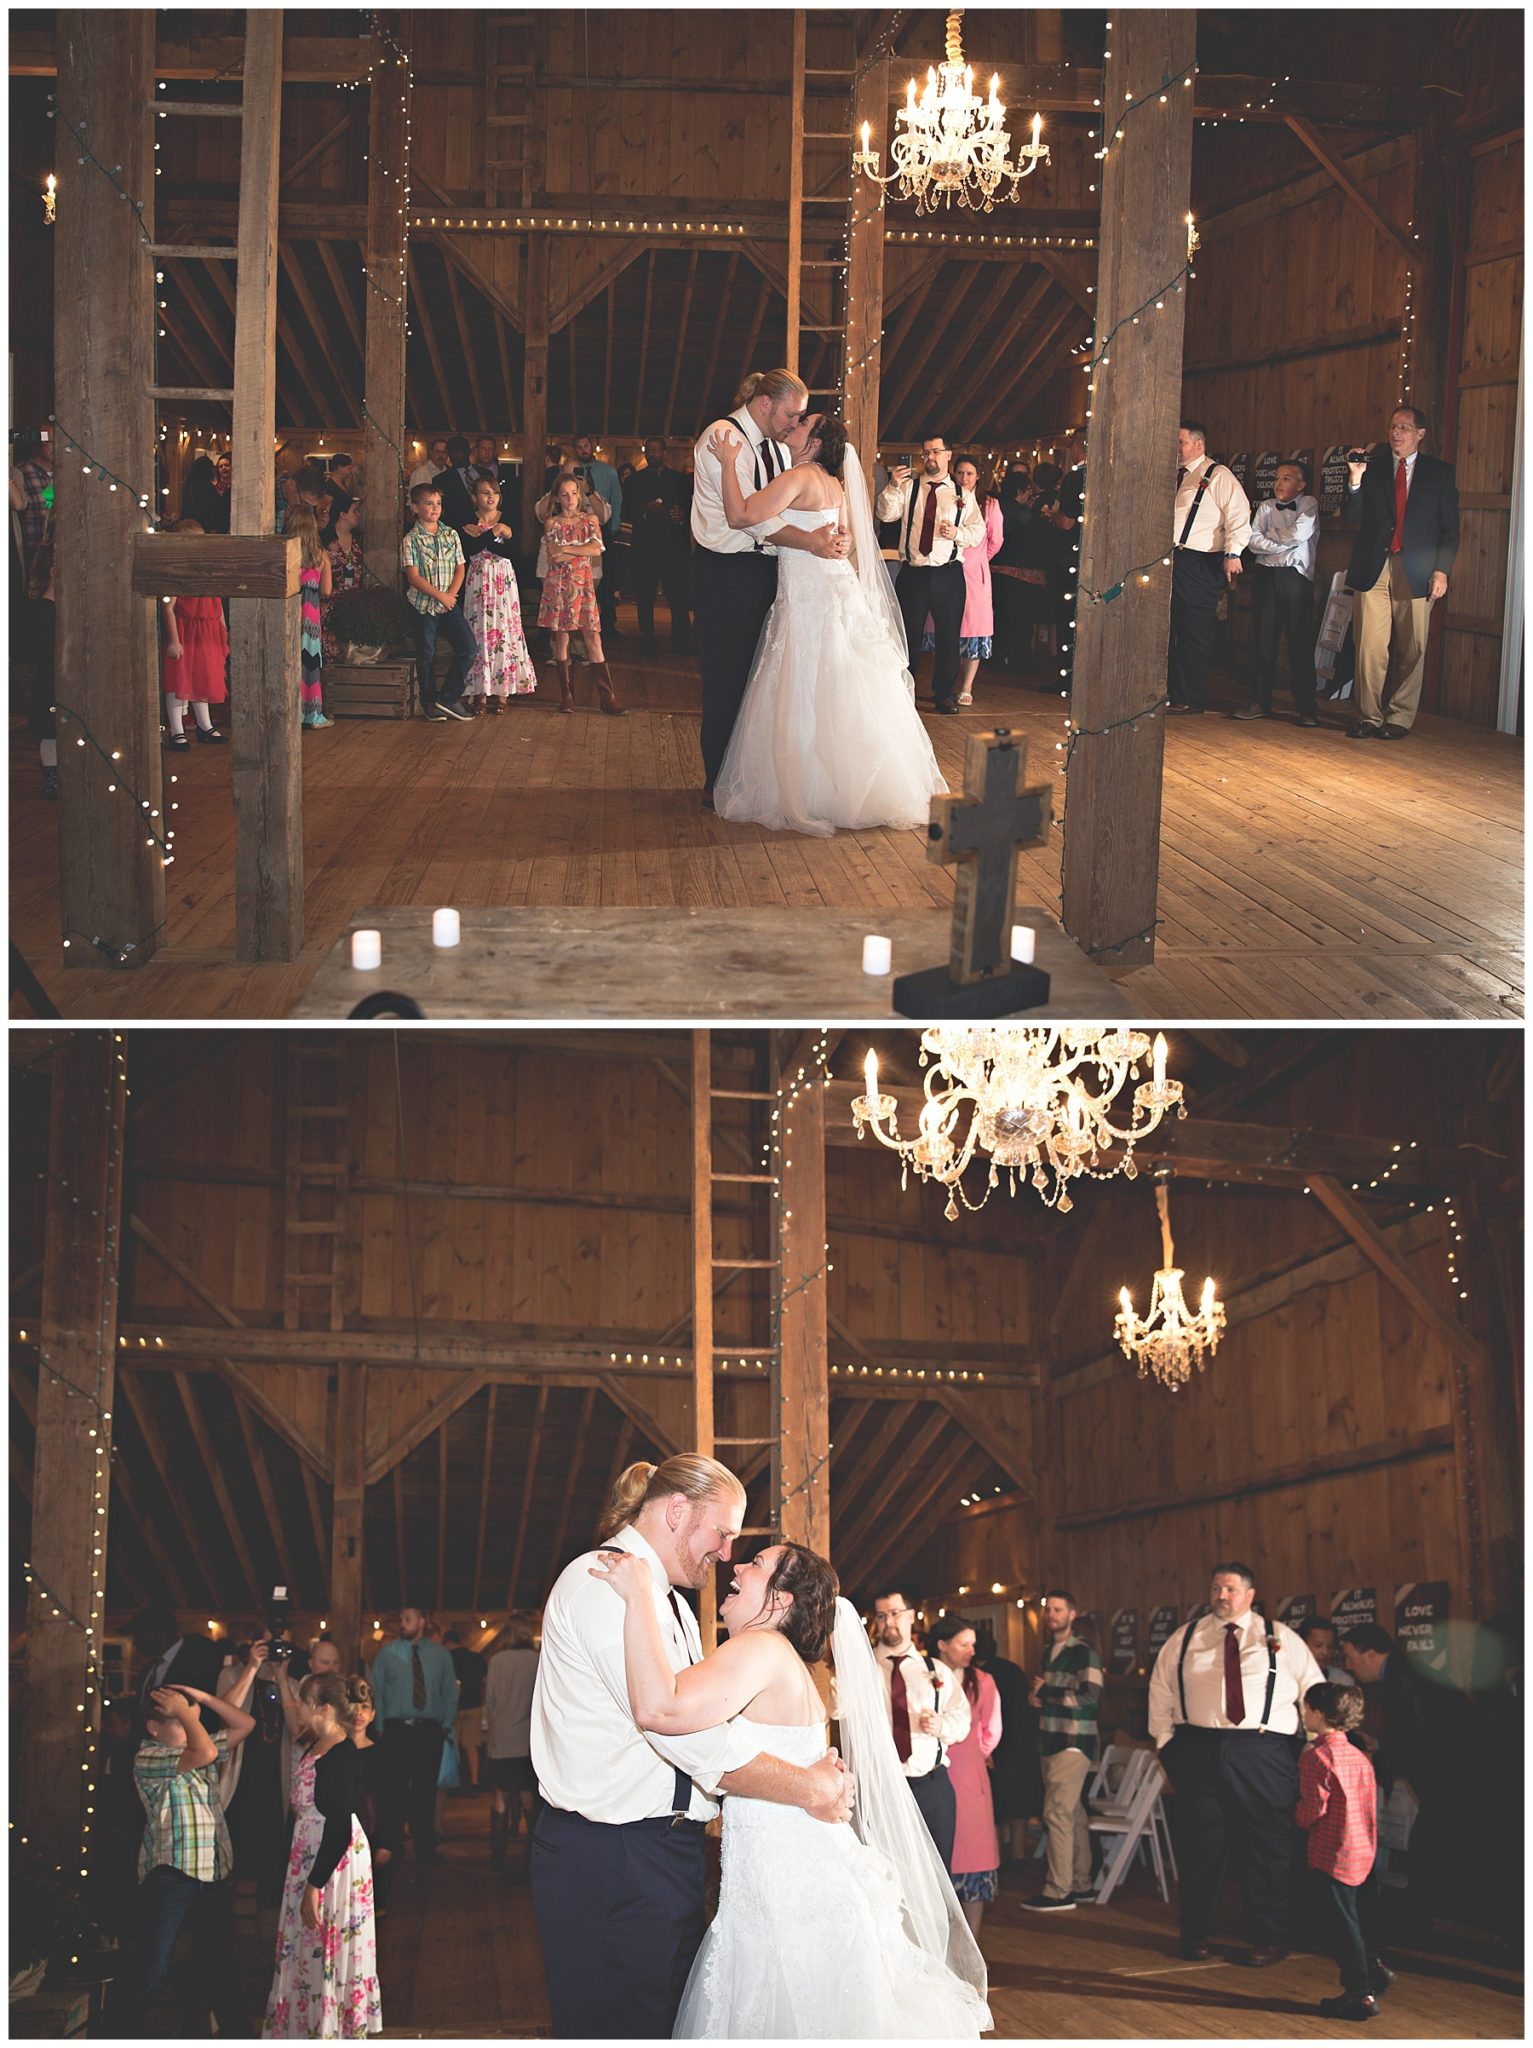 Kaleena and Steve :: Gobles Michigan Vintage Rose Wedding Photographer - Gregersen Photography